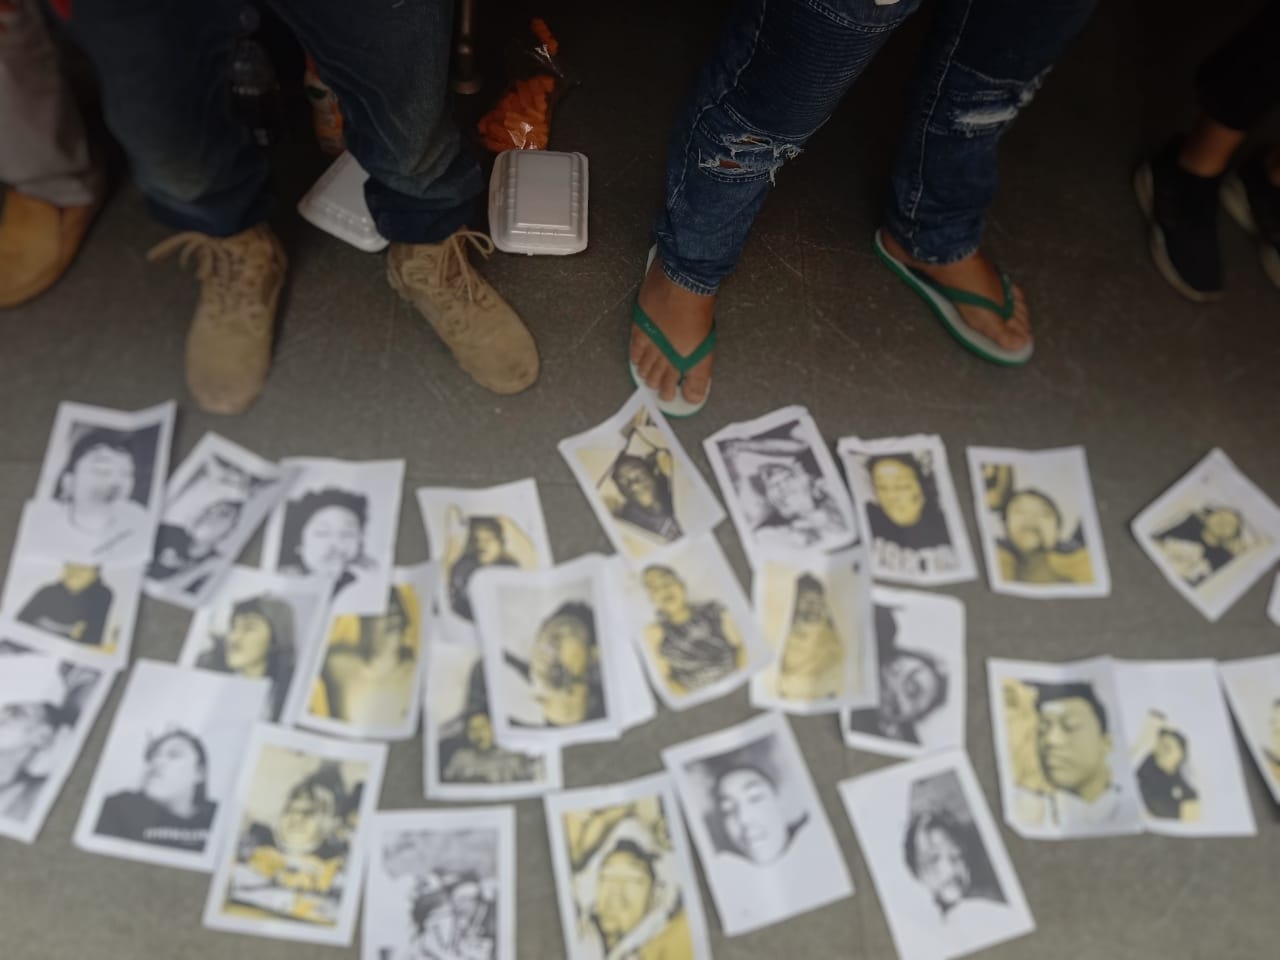 Kertas kertas berisi foto jenazah korban Tragedi Kanjuruhan.